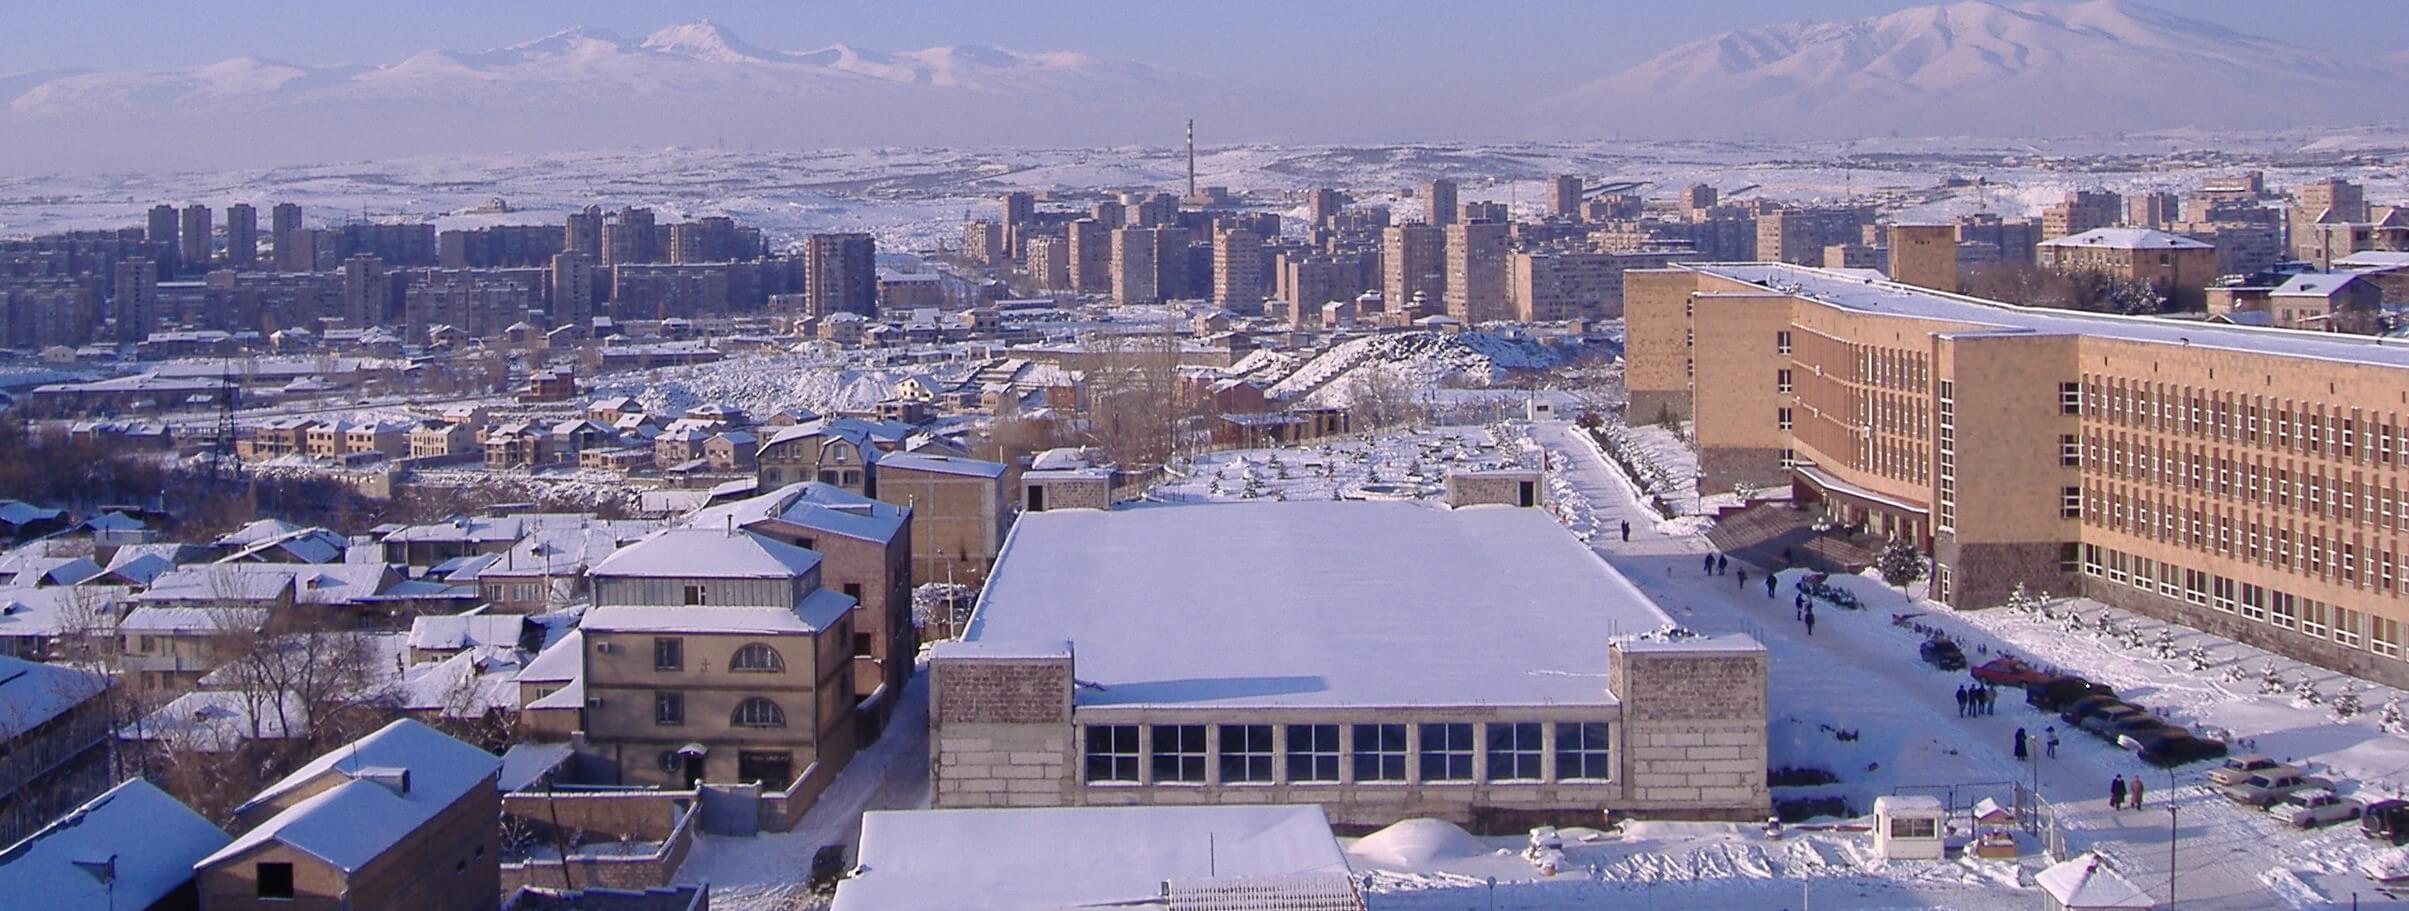 Russian-Armenian University Campus, Yerevan, Armenia. Photo by [Vilnius](https://commons.wikimedia.org/wiki/User:Vilnius) (CC-BY-3.0).